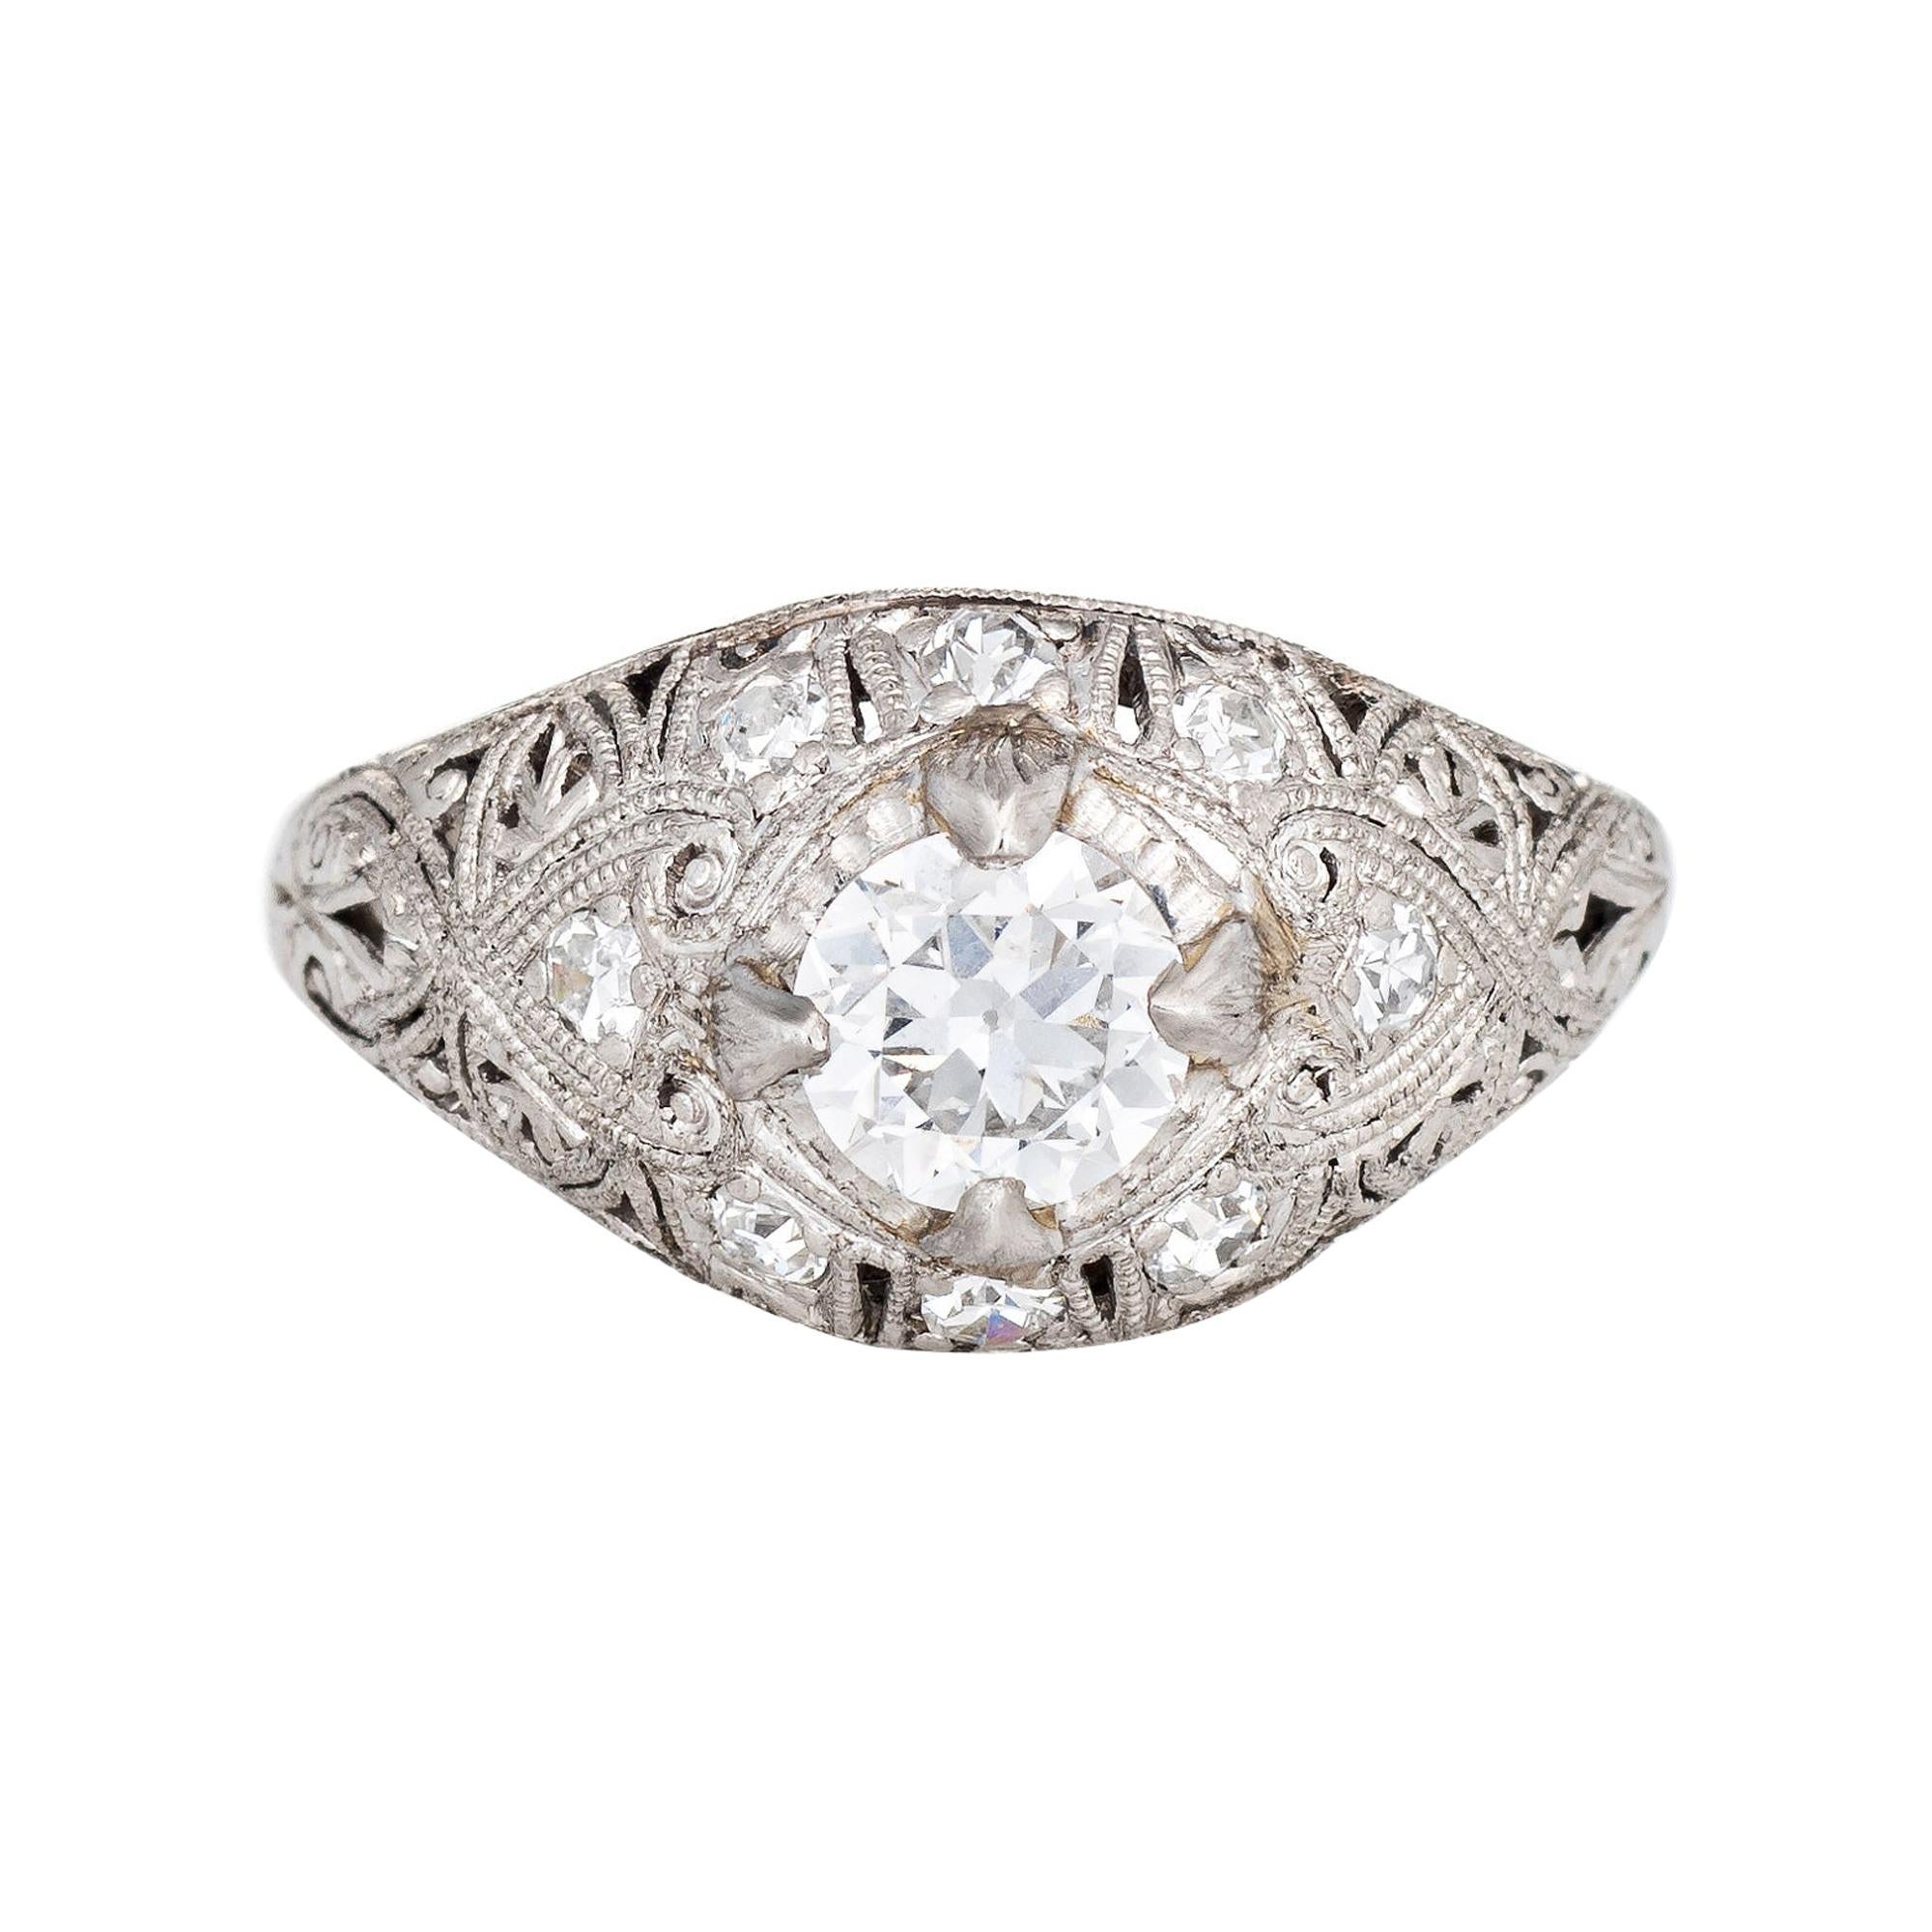 Antique Edwardian 0.55ct Diamond Engagement Ring Vintage Platinum Bridal Jewelry